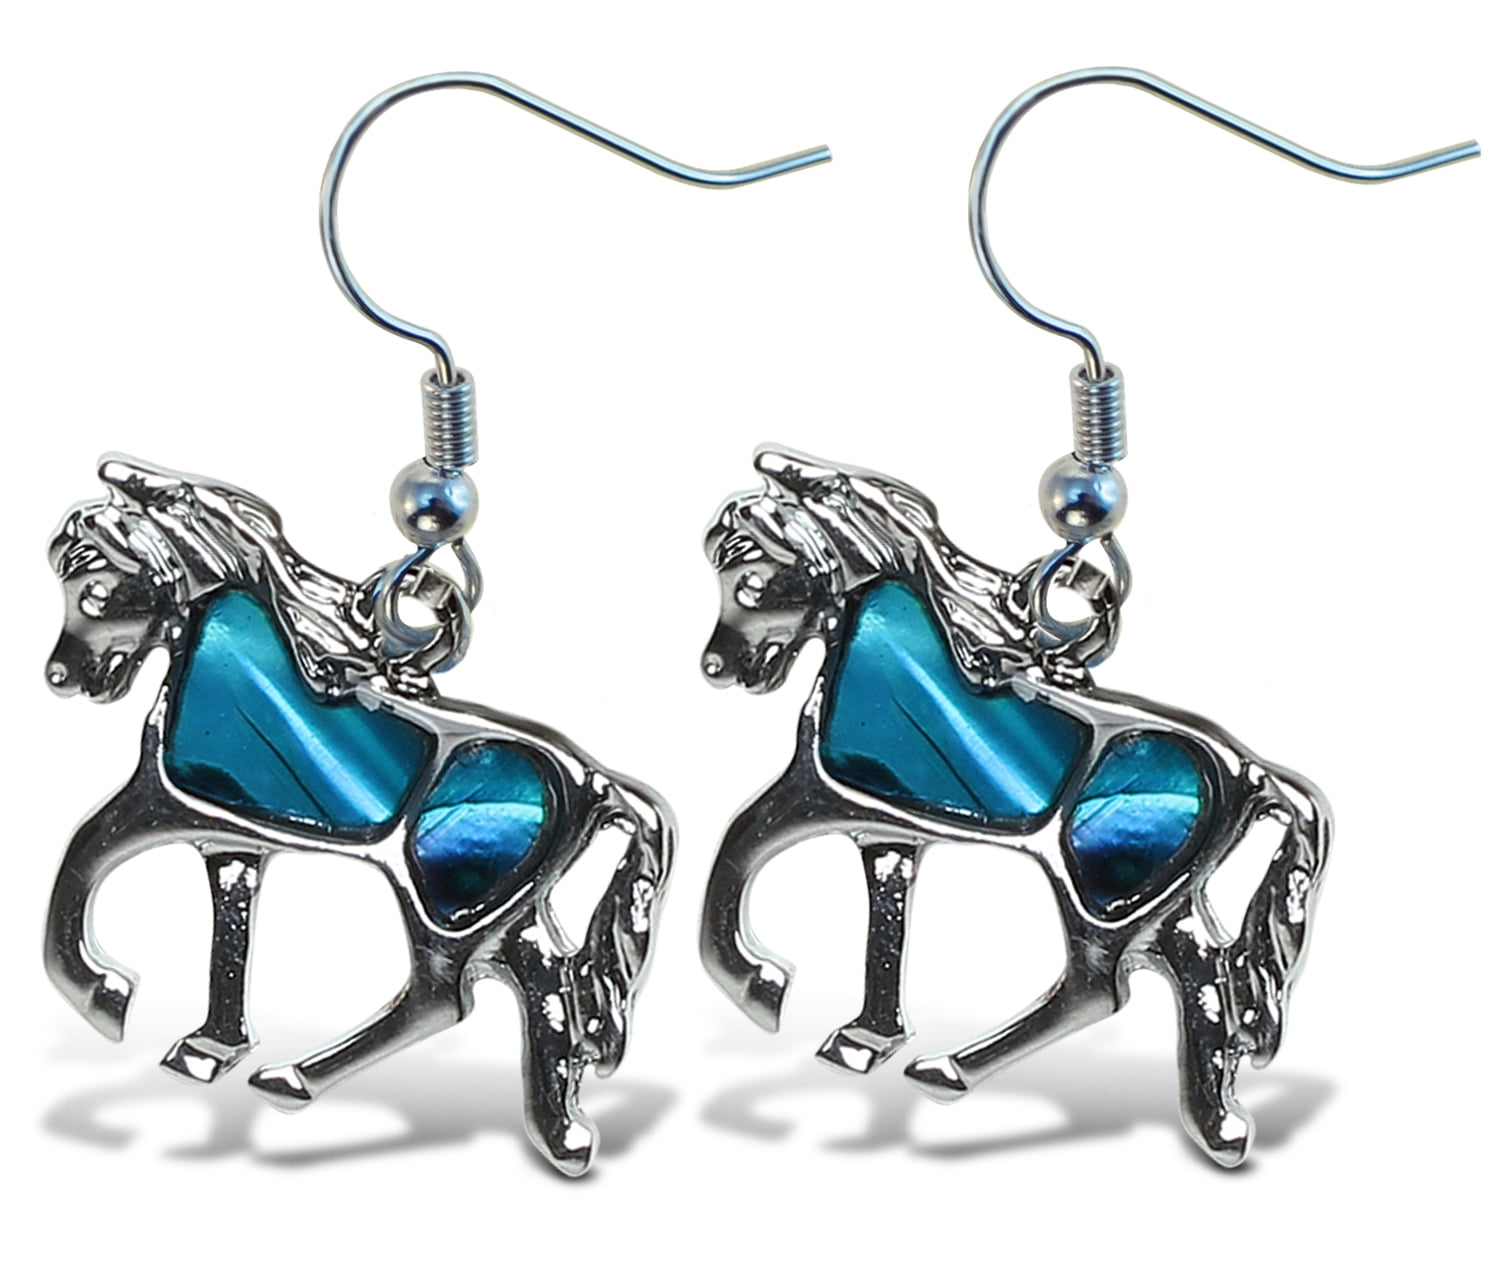 Aqua Jewelry  - Earrings - Dangle Post - Fish Hook - Horse